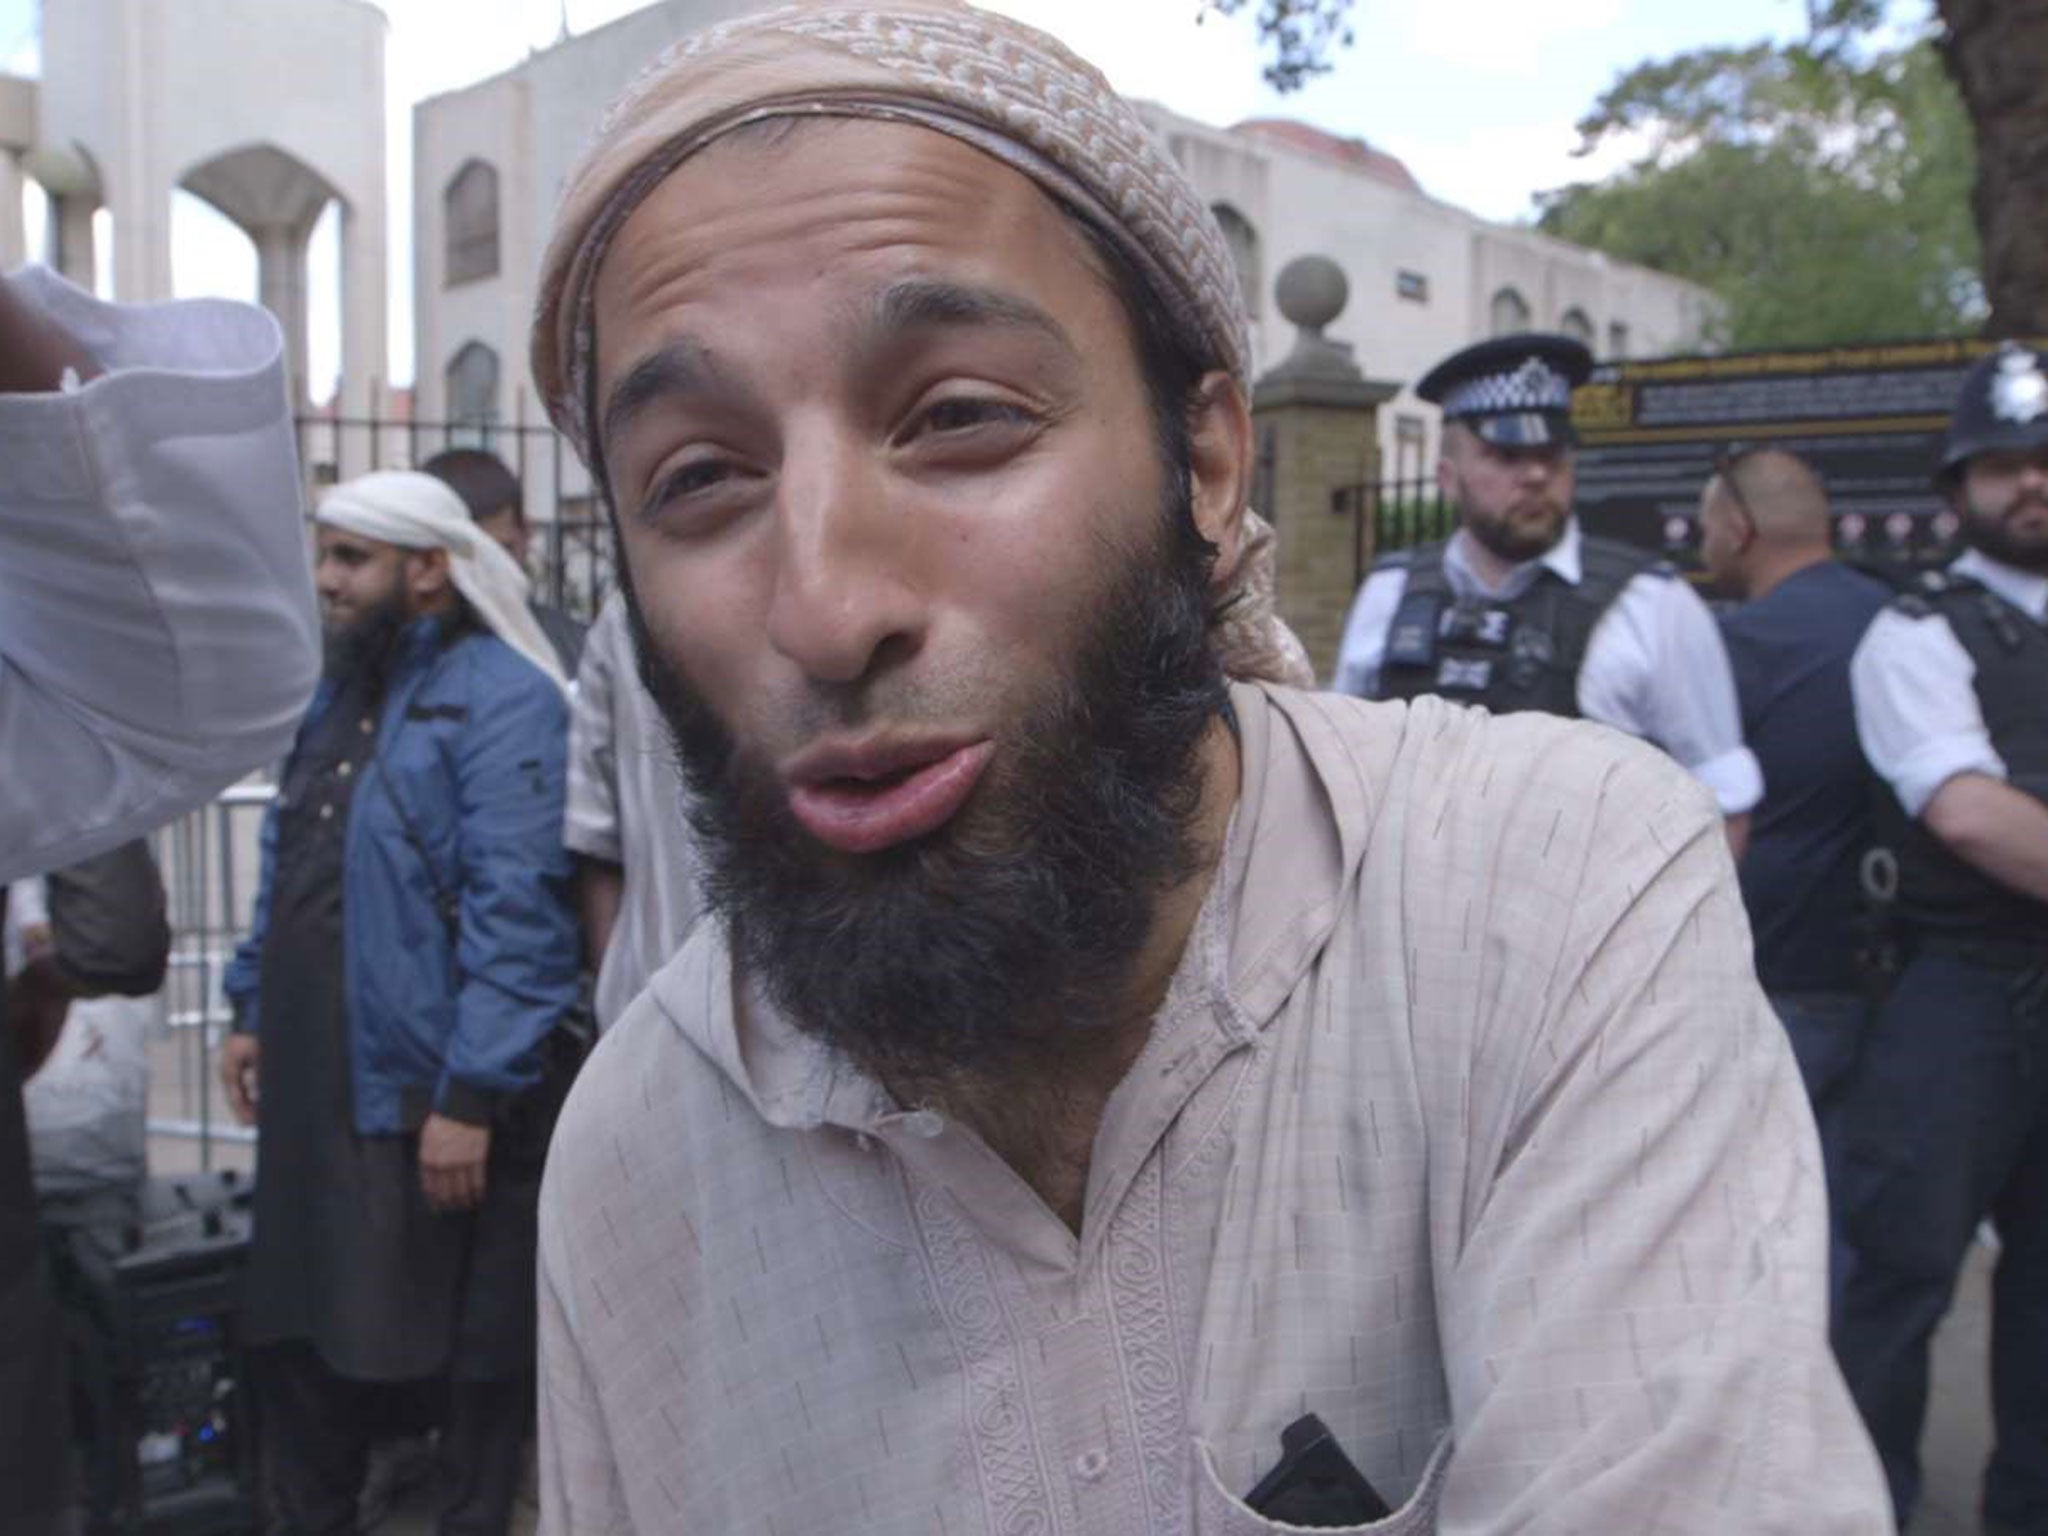 London Bridge attacker Khuram Butt appearing in Channel 4's 'Jihadis Next Door' documentary